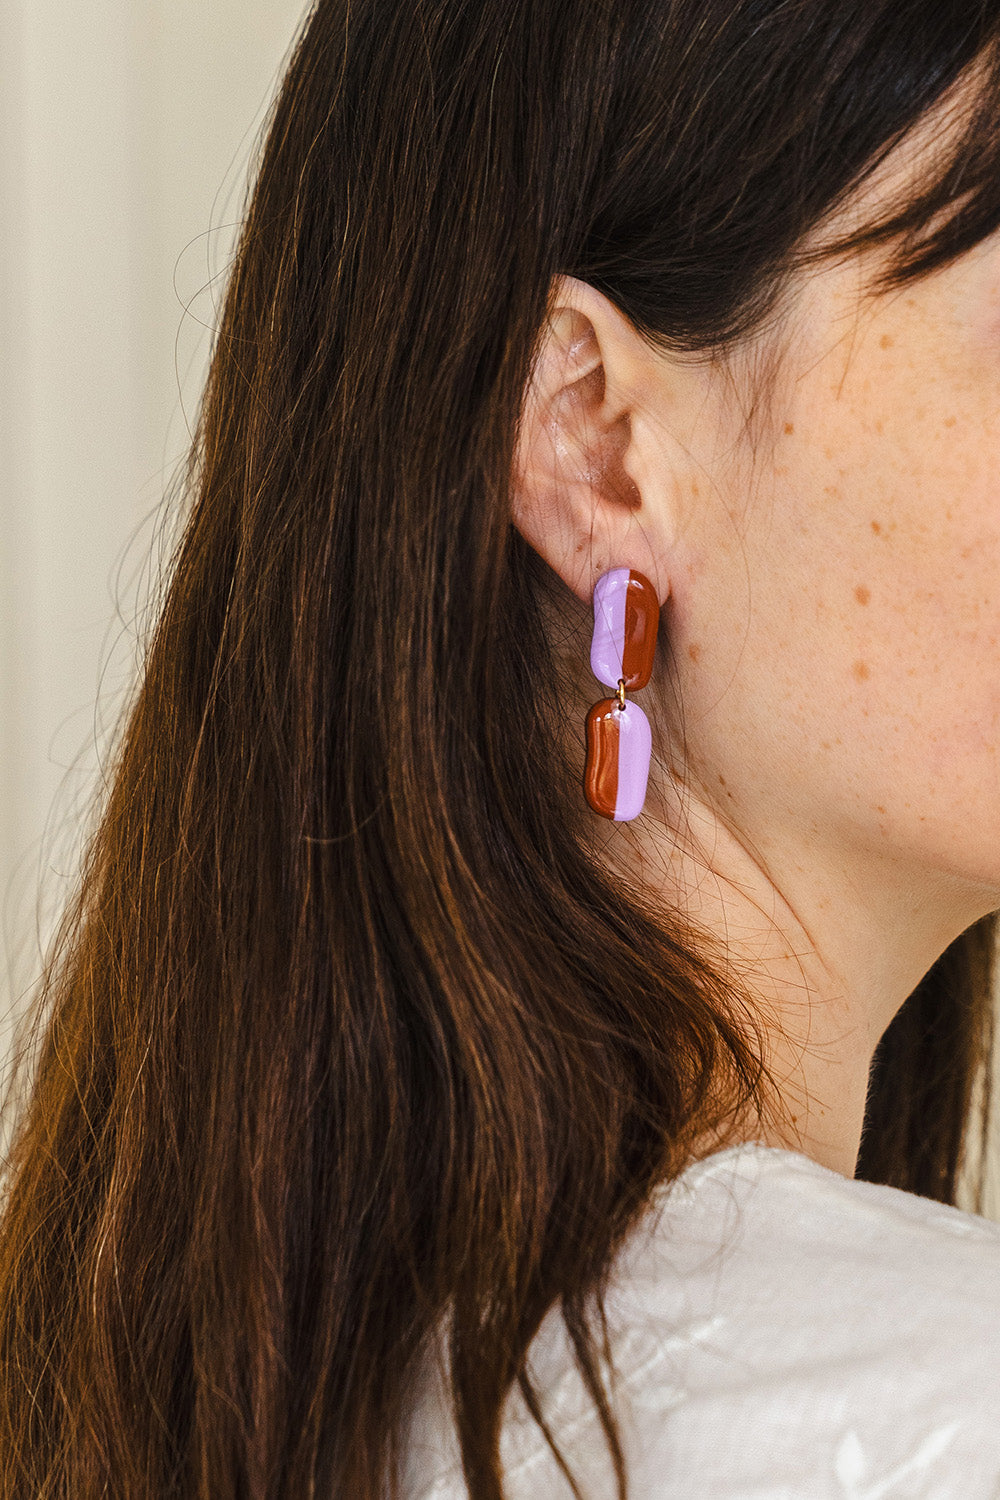 Earrings Florence - Lilac / Caramel